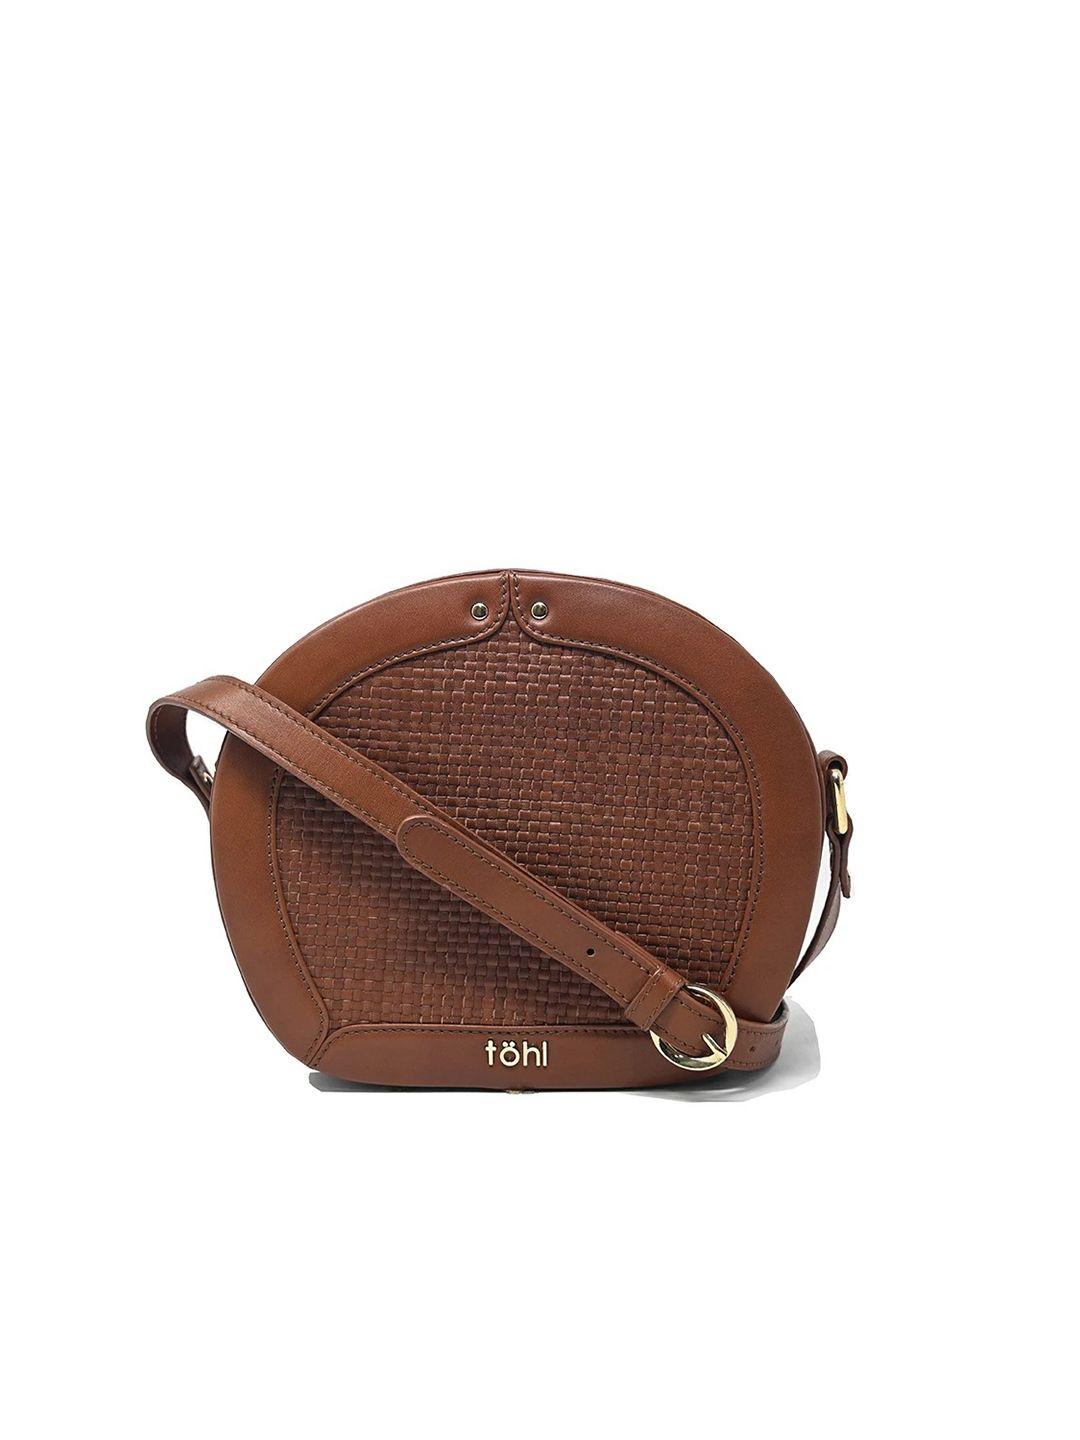 tohl tan textured sling bag